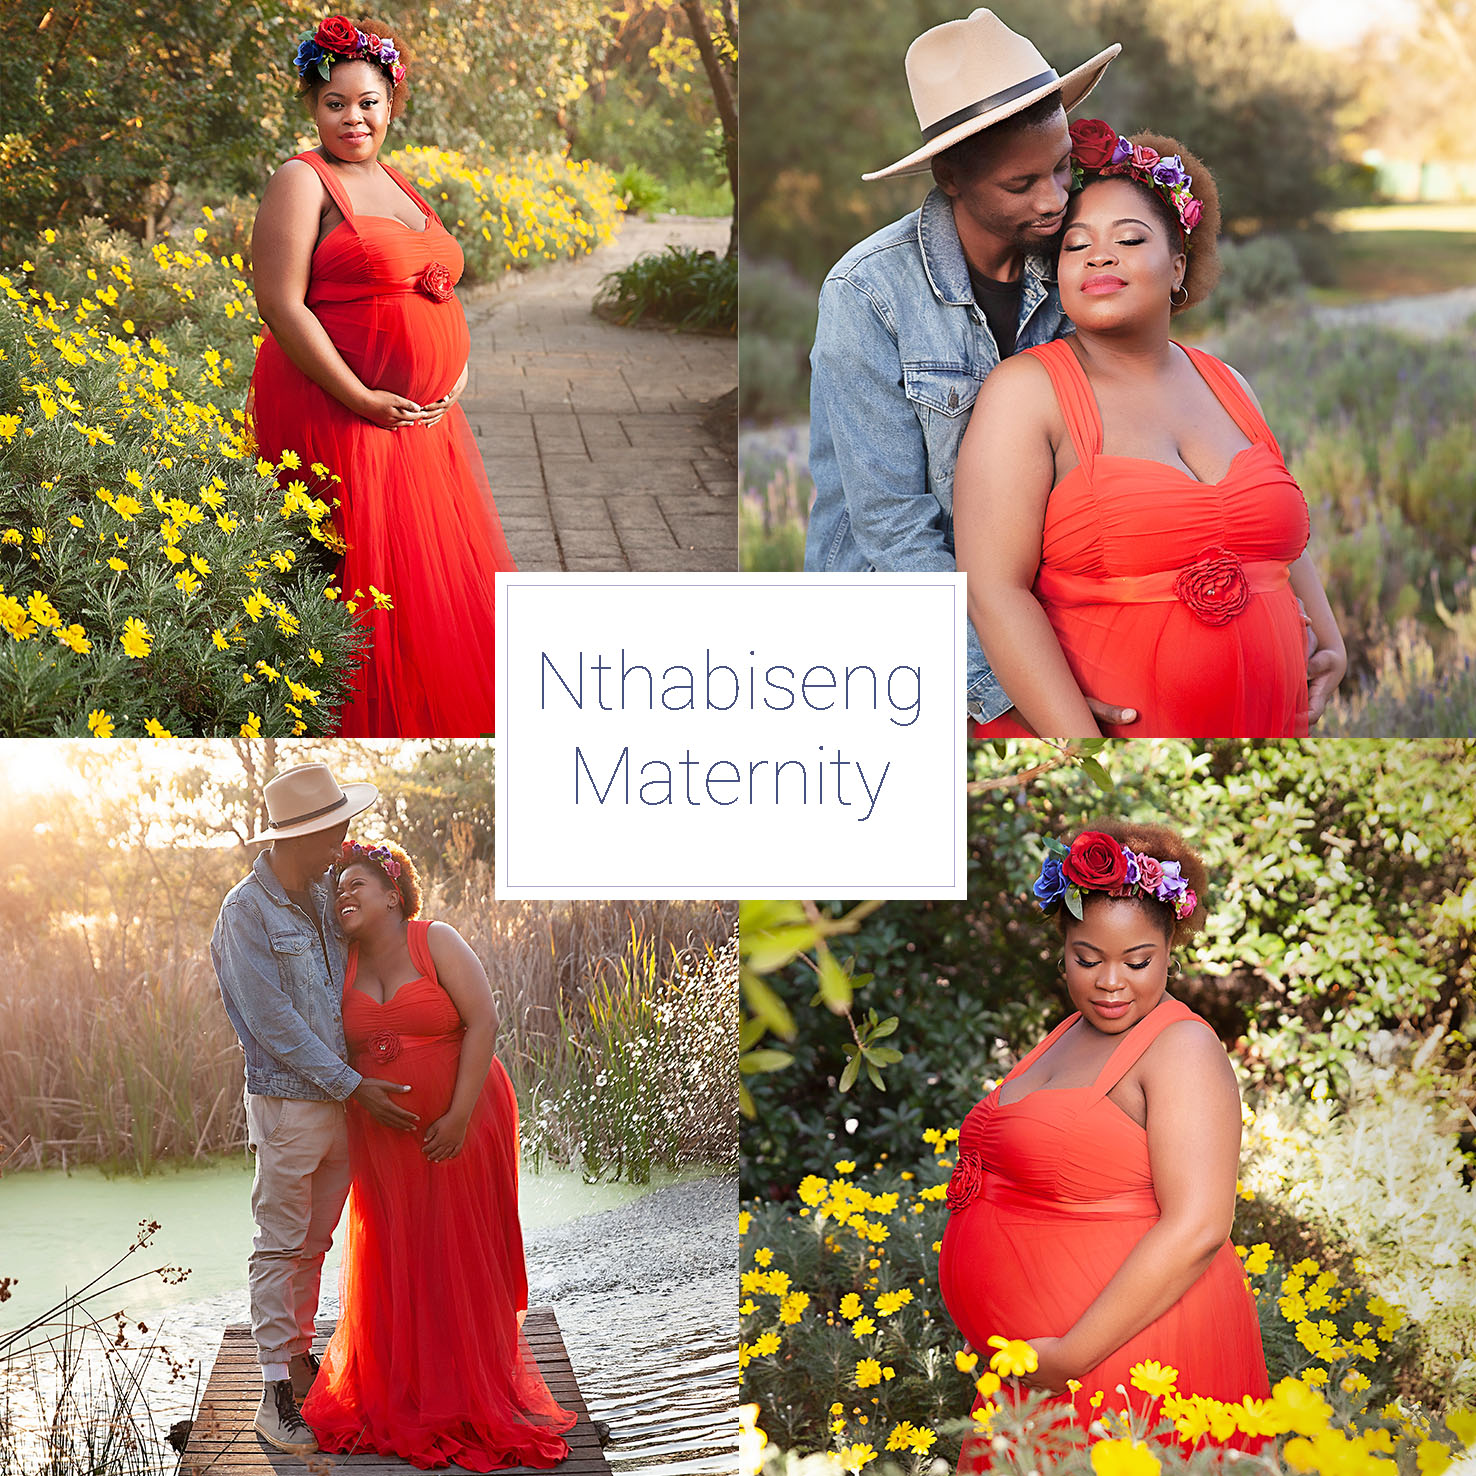 Nthabiseng Maternity